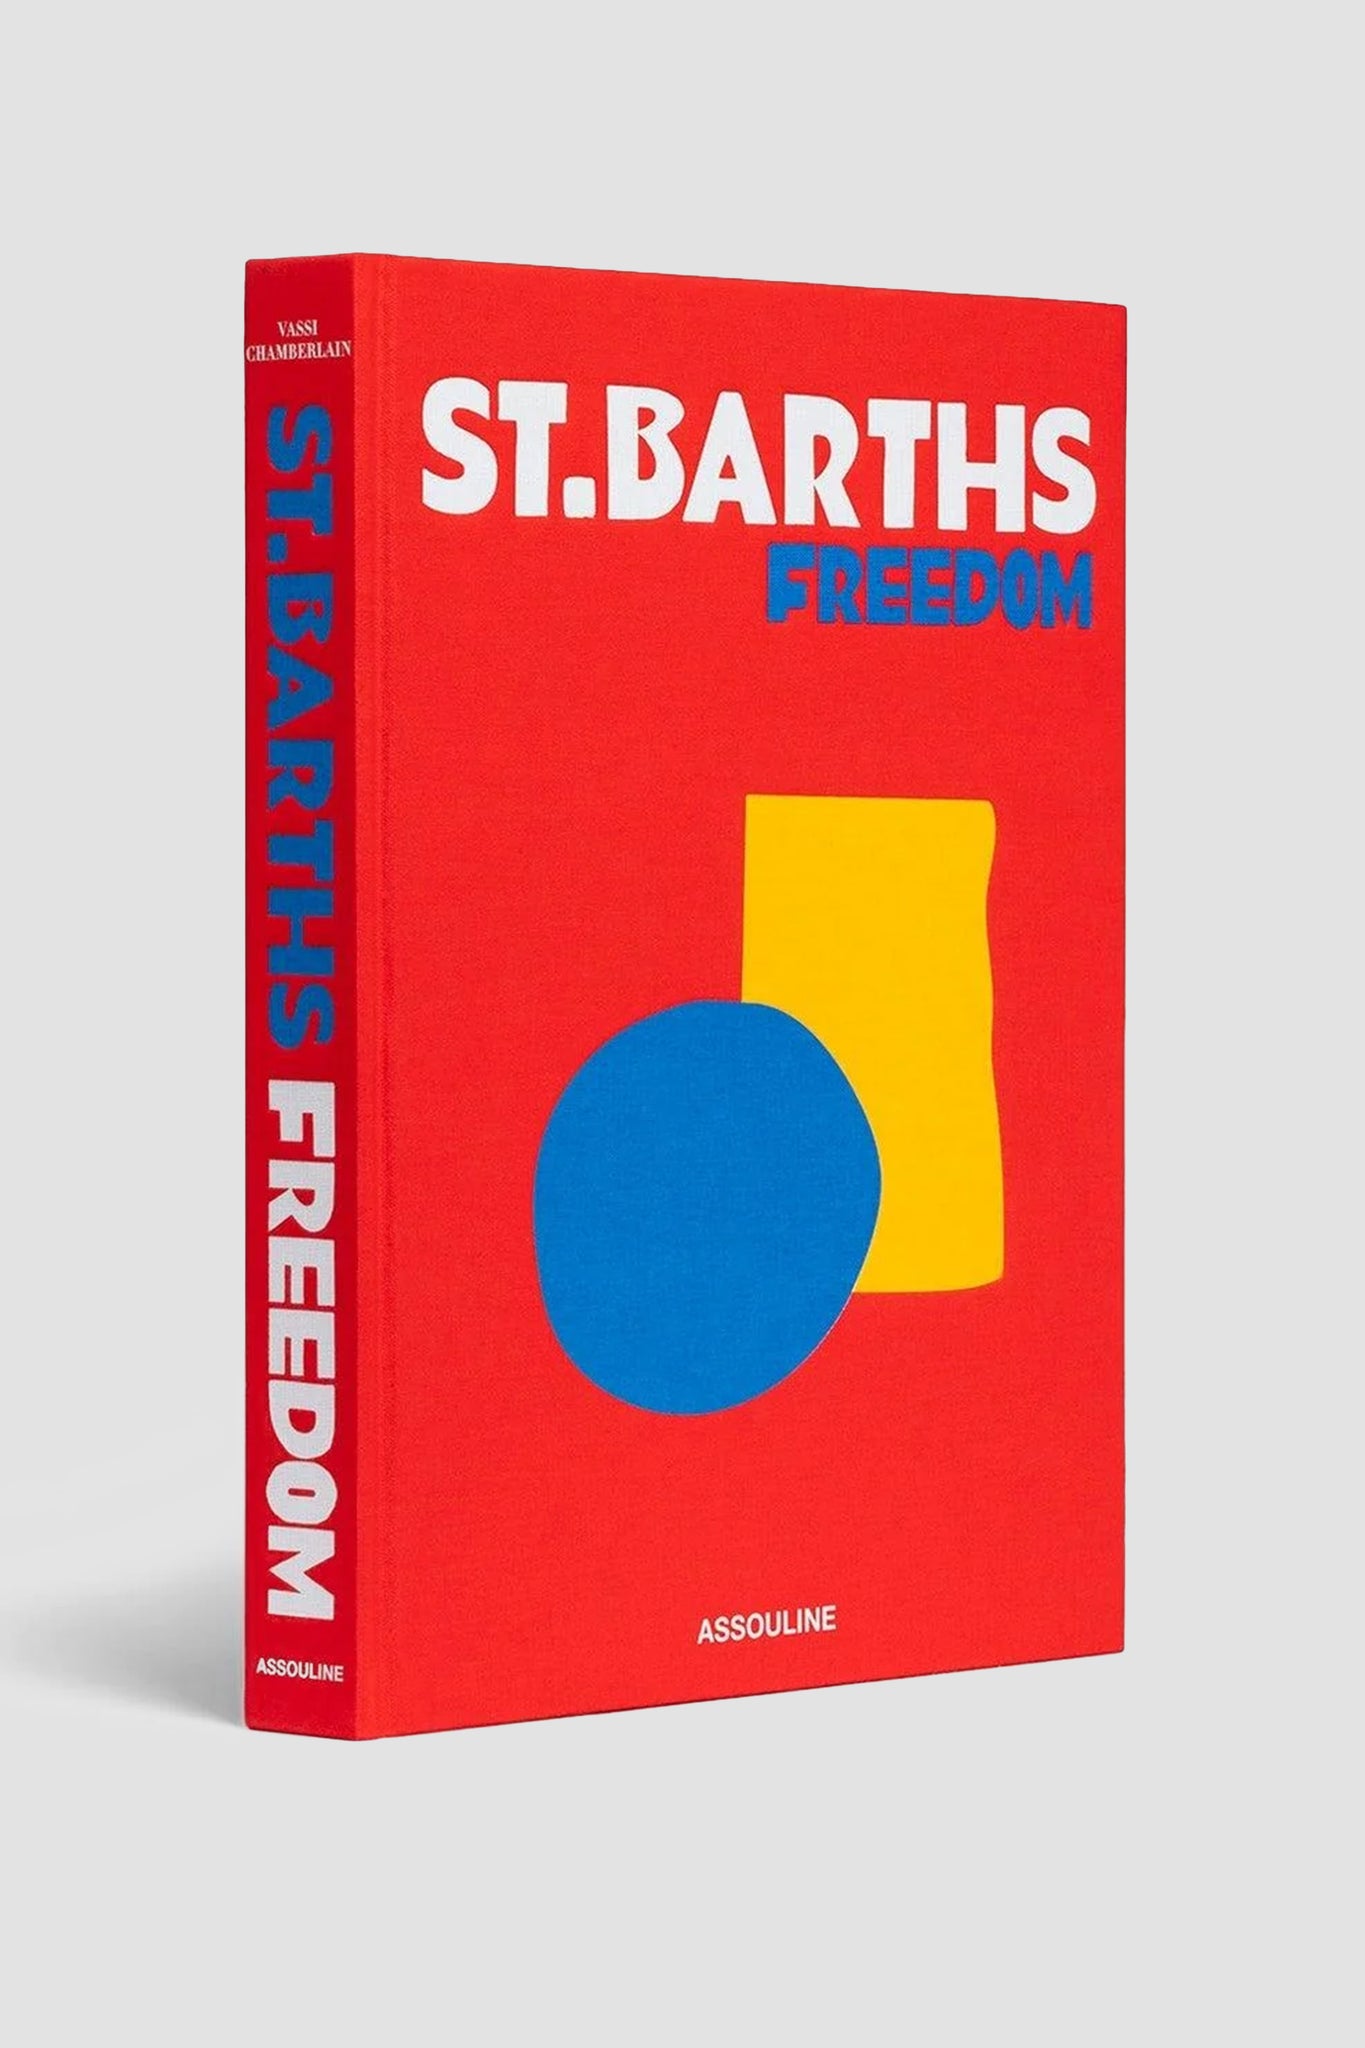 ASSOULINE St. Barths Freedom by Vassi Chamberlain